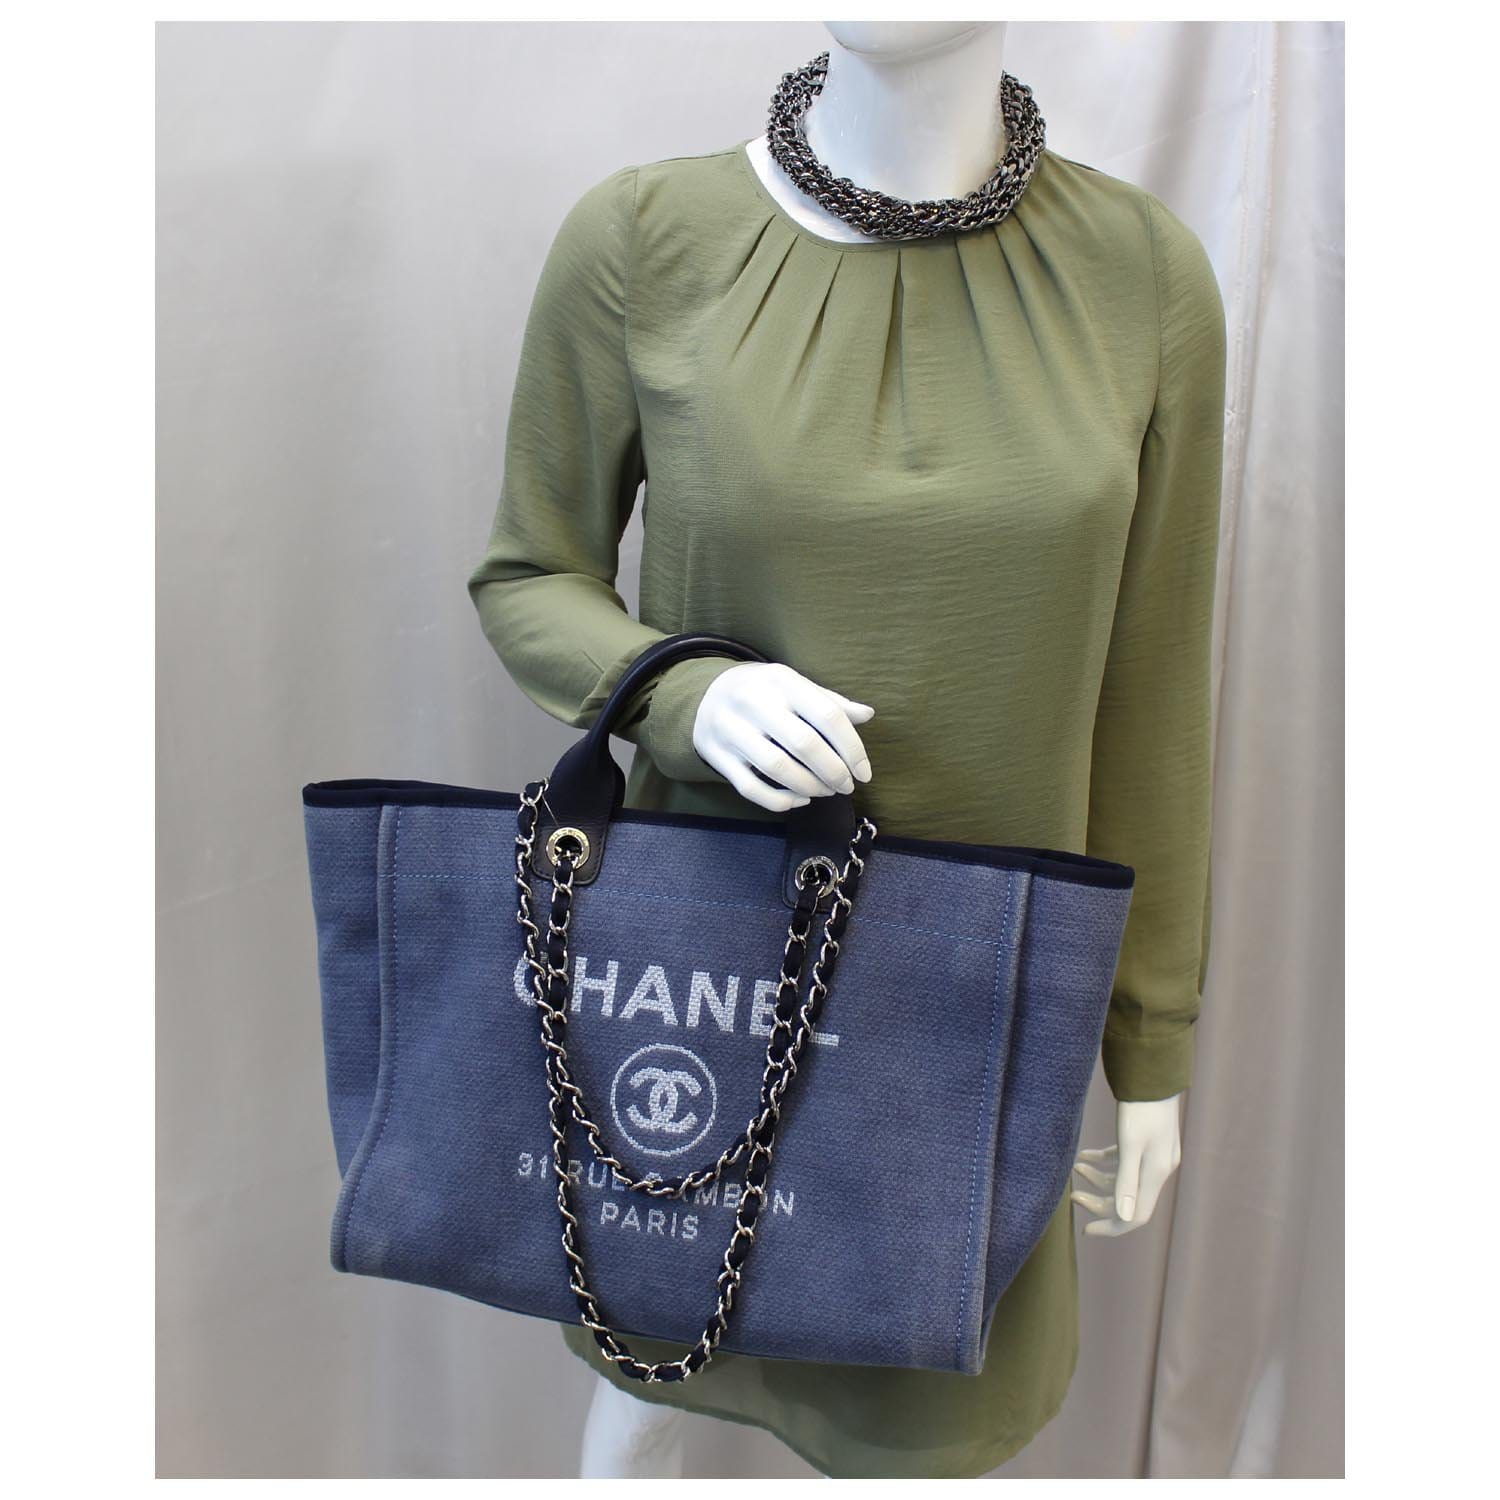 The Chanel Summer 2012 Tote Bag  Sandras Closet